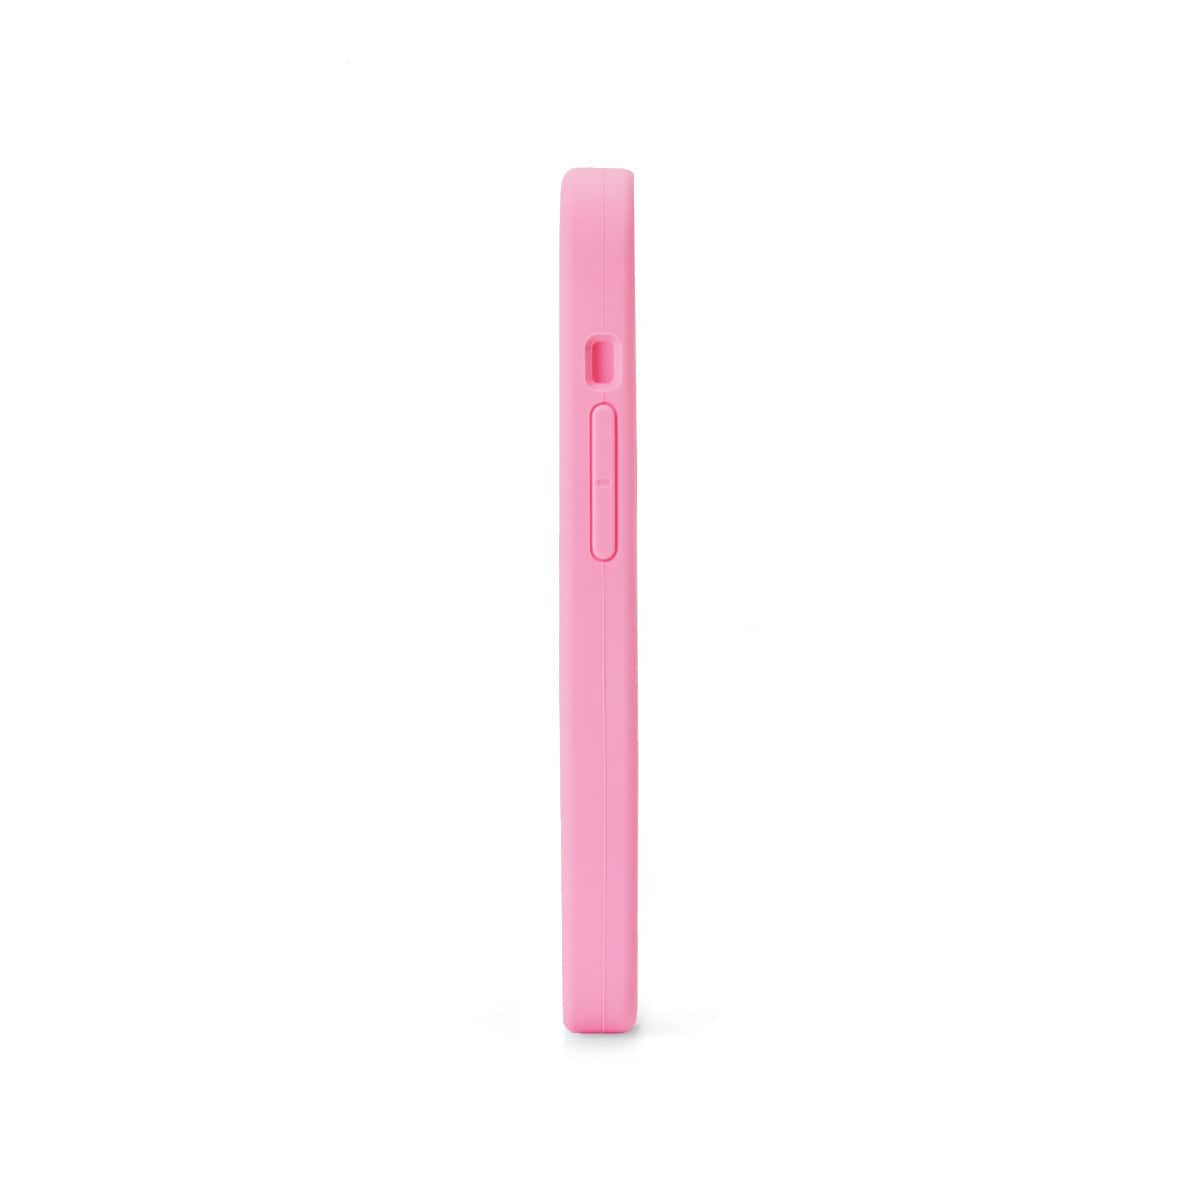 BU WON MOBILE ACC iPhone 14 아이폰 14 라인프렌즈 부원 꼴레 핑크 아이폰 케이스